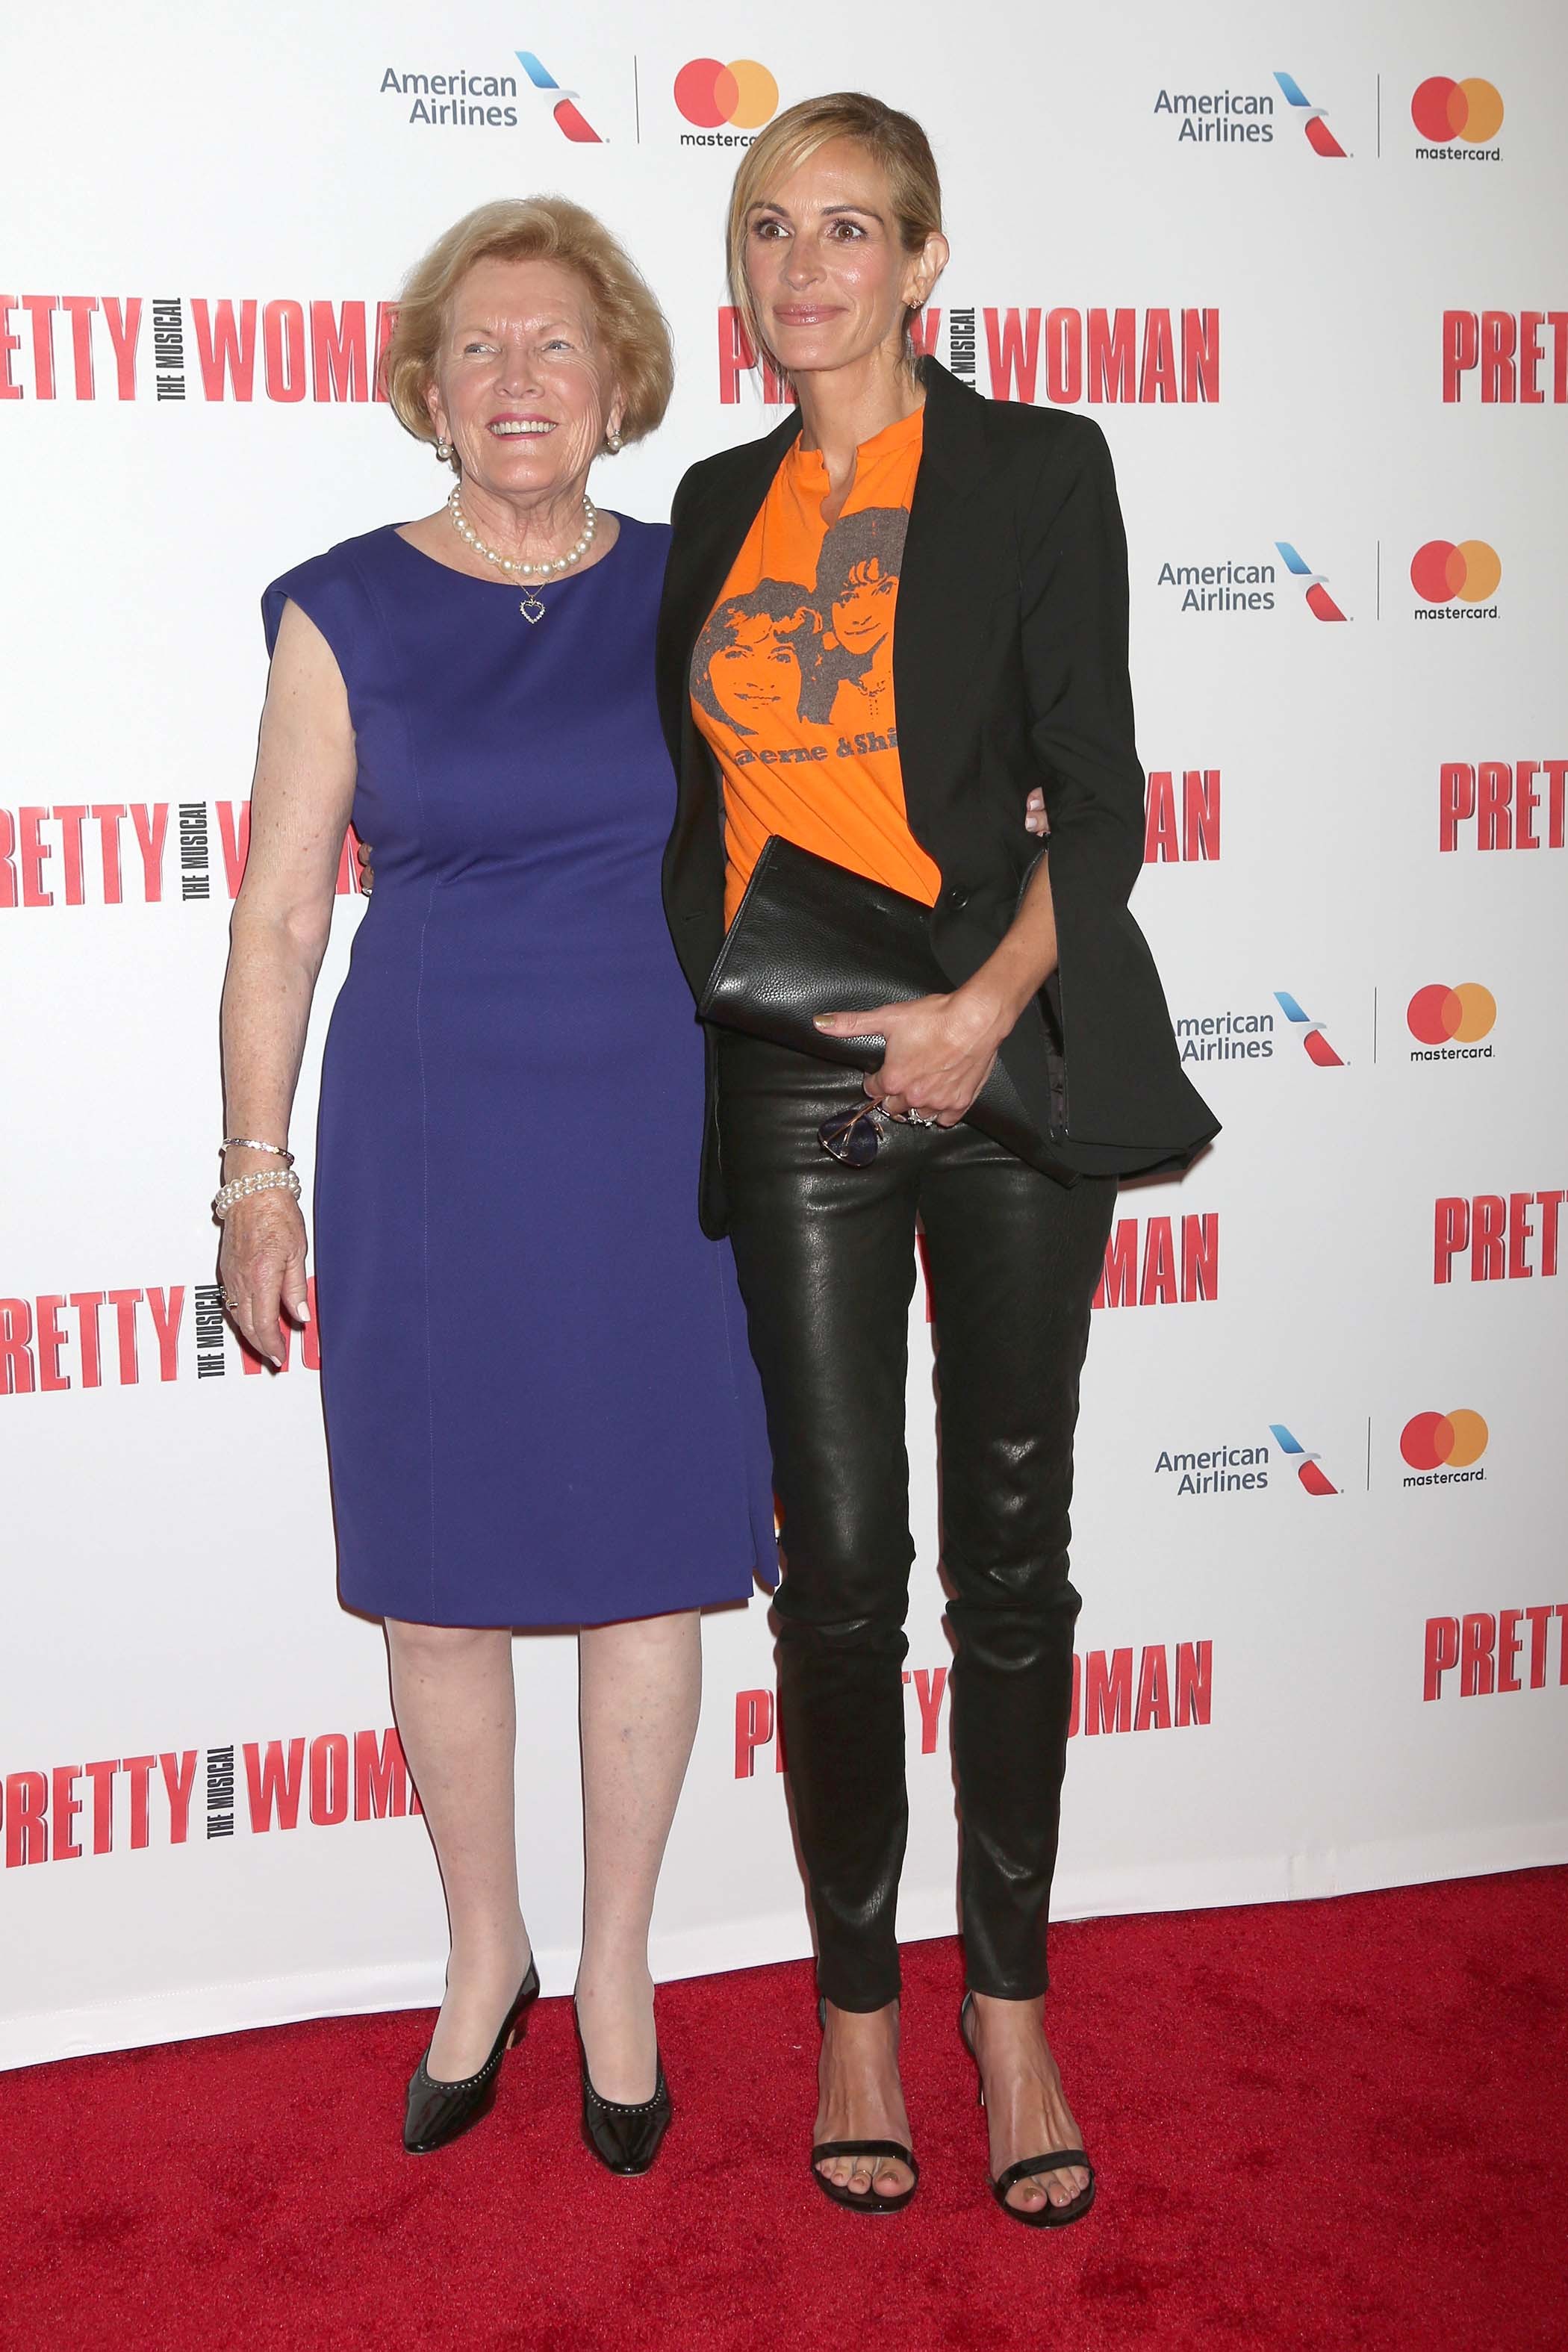 Julia Roberts attends Pretty Woman musical tribute performance